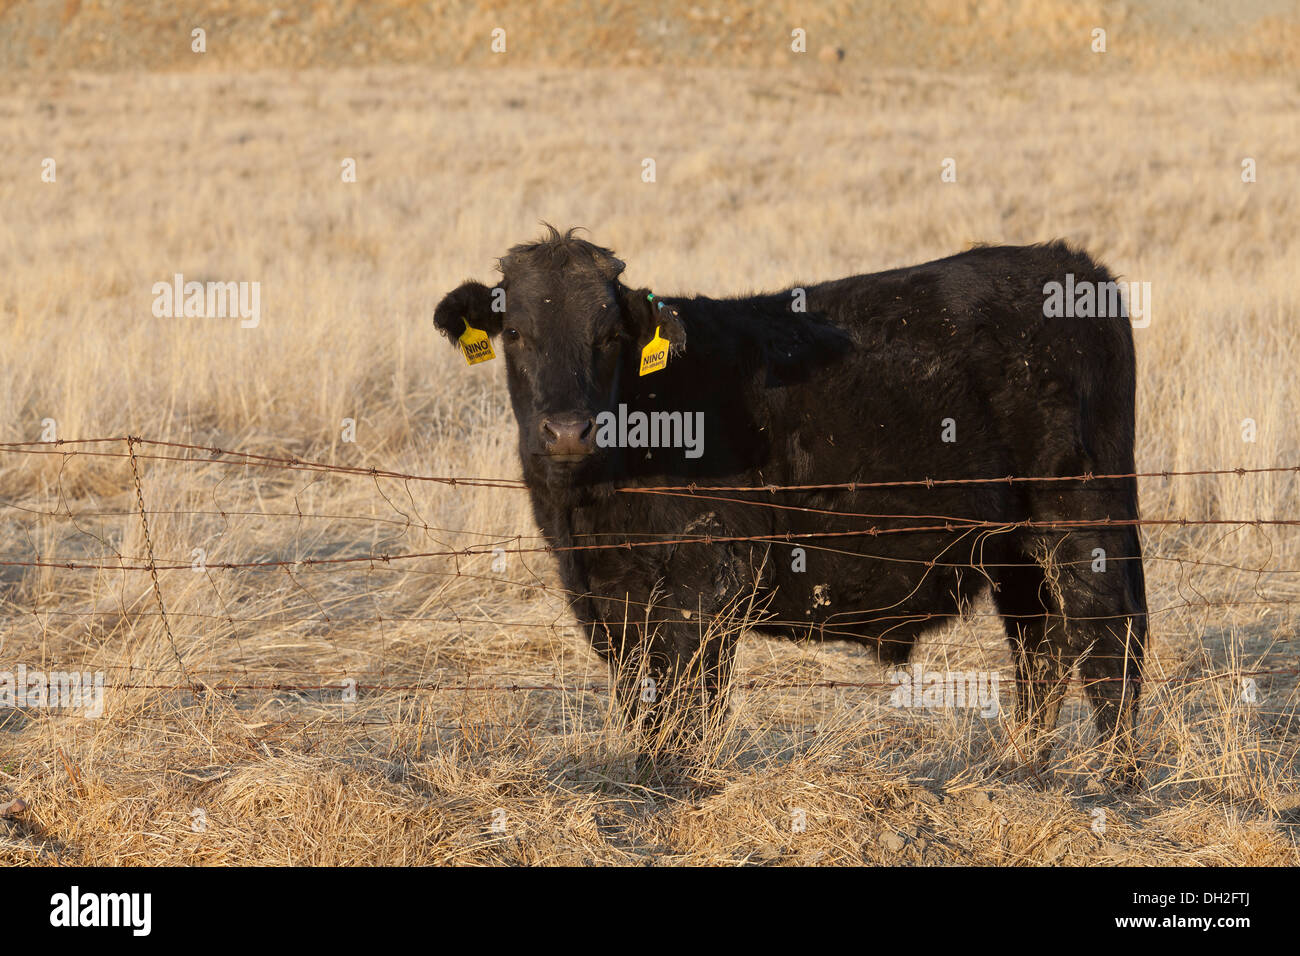 Angus mucca in erba secca campo - Coalinga, California USA Foto Stock